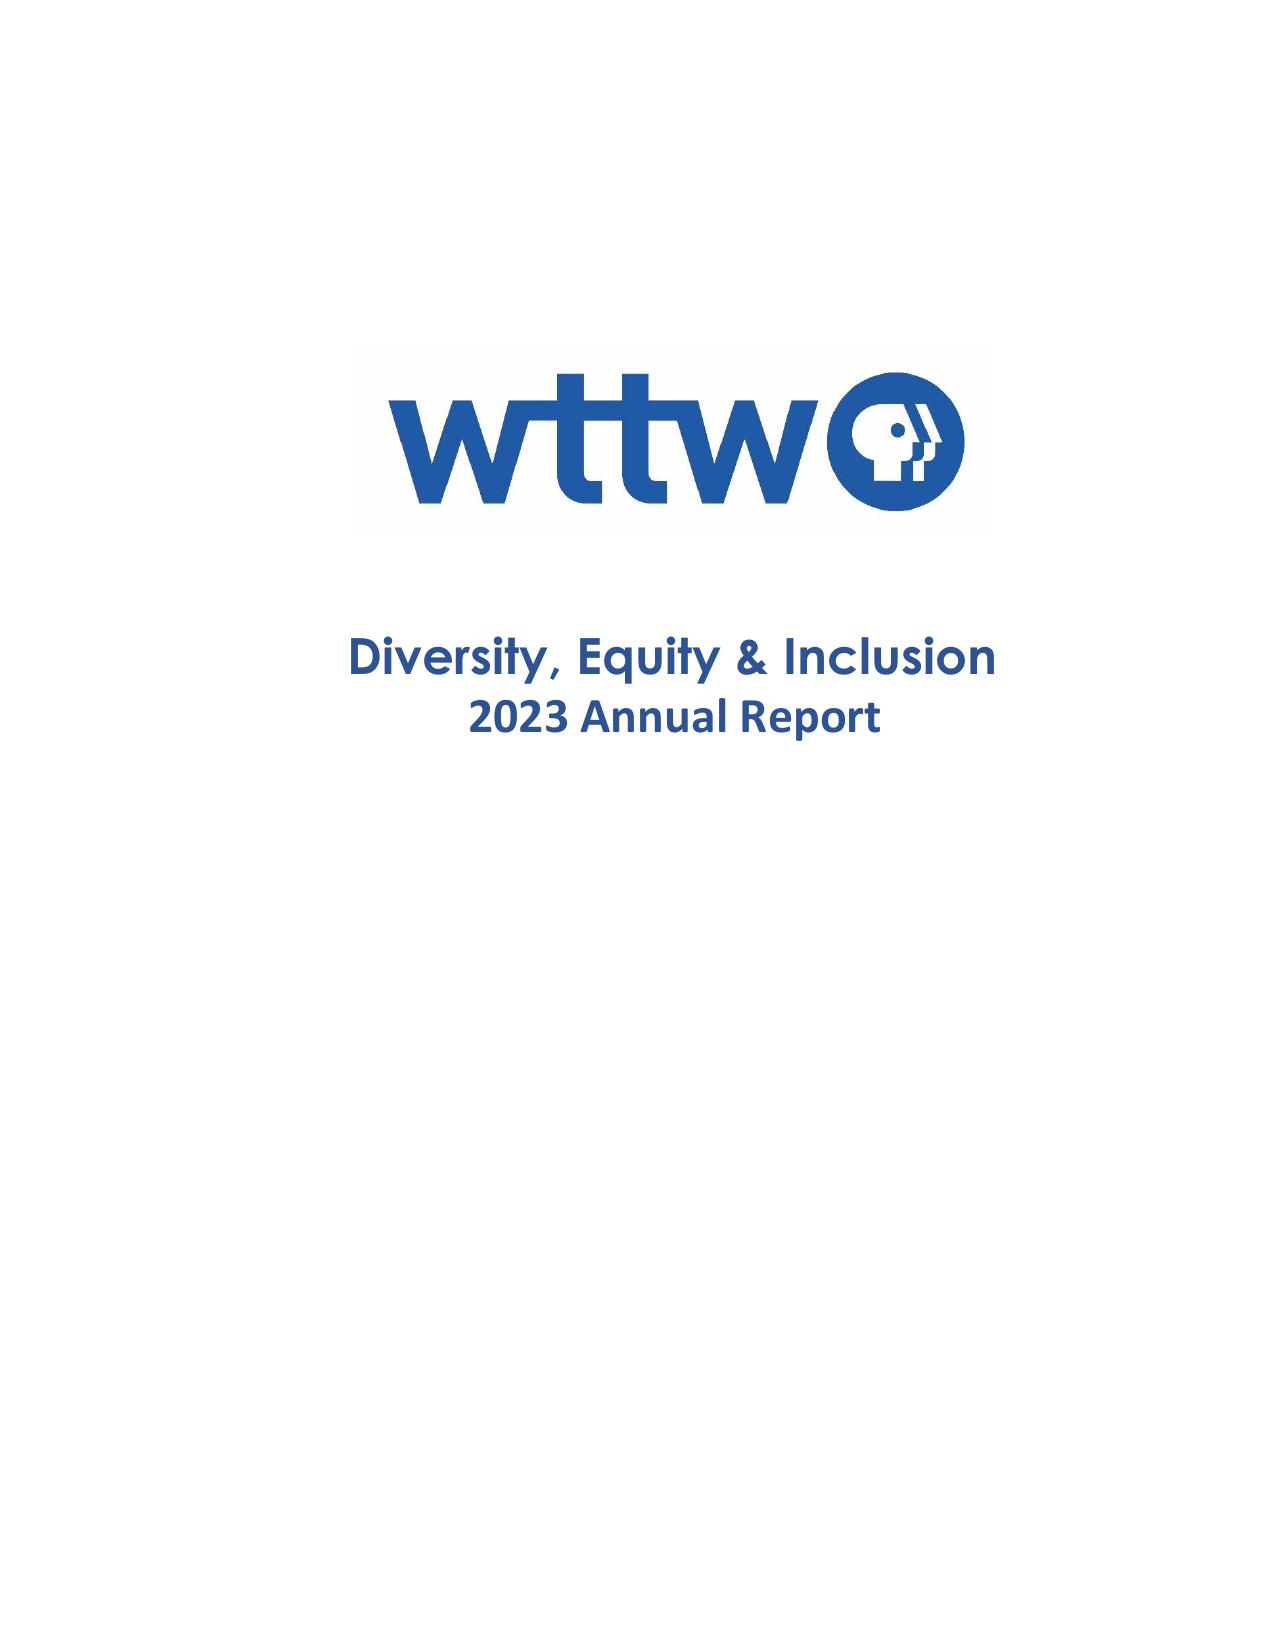 WFMT 2023 Annual Report